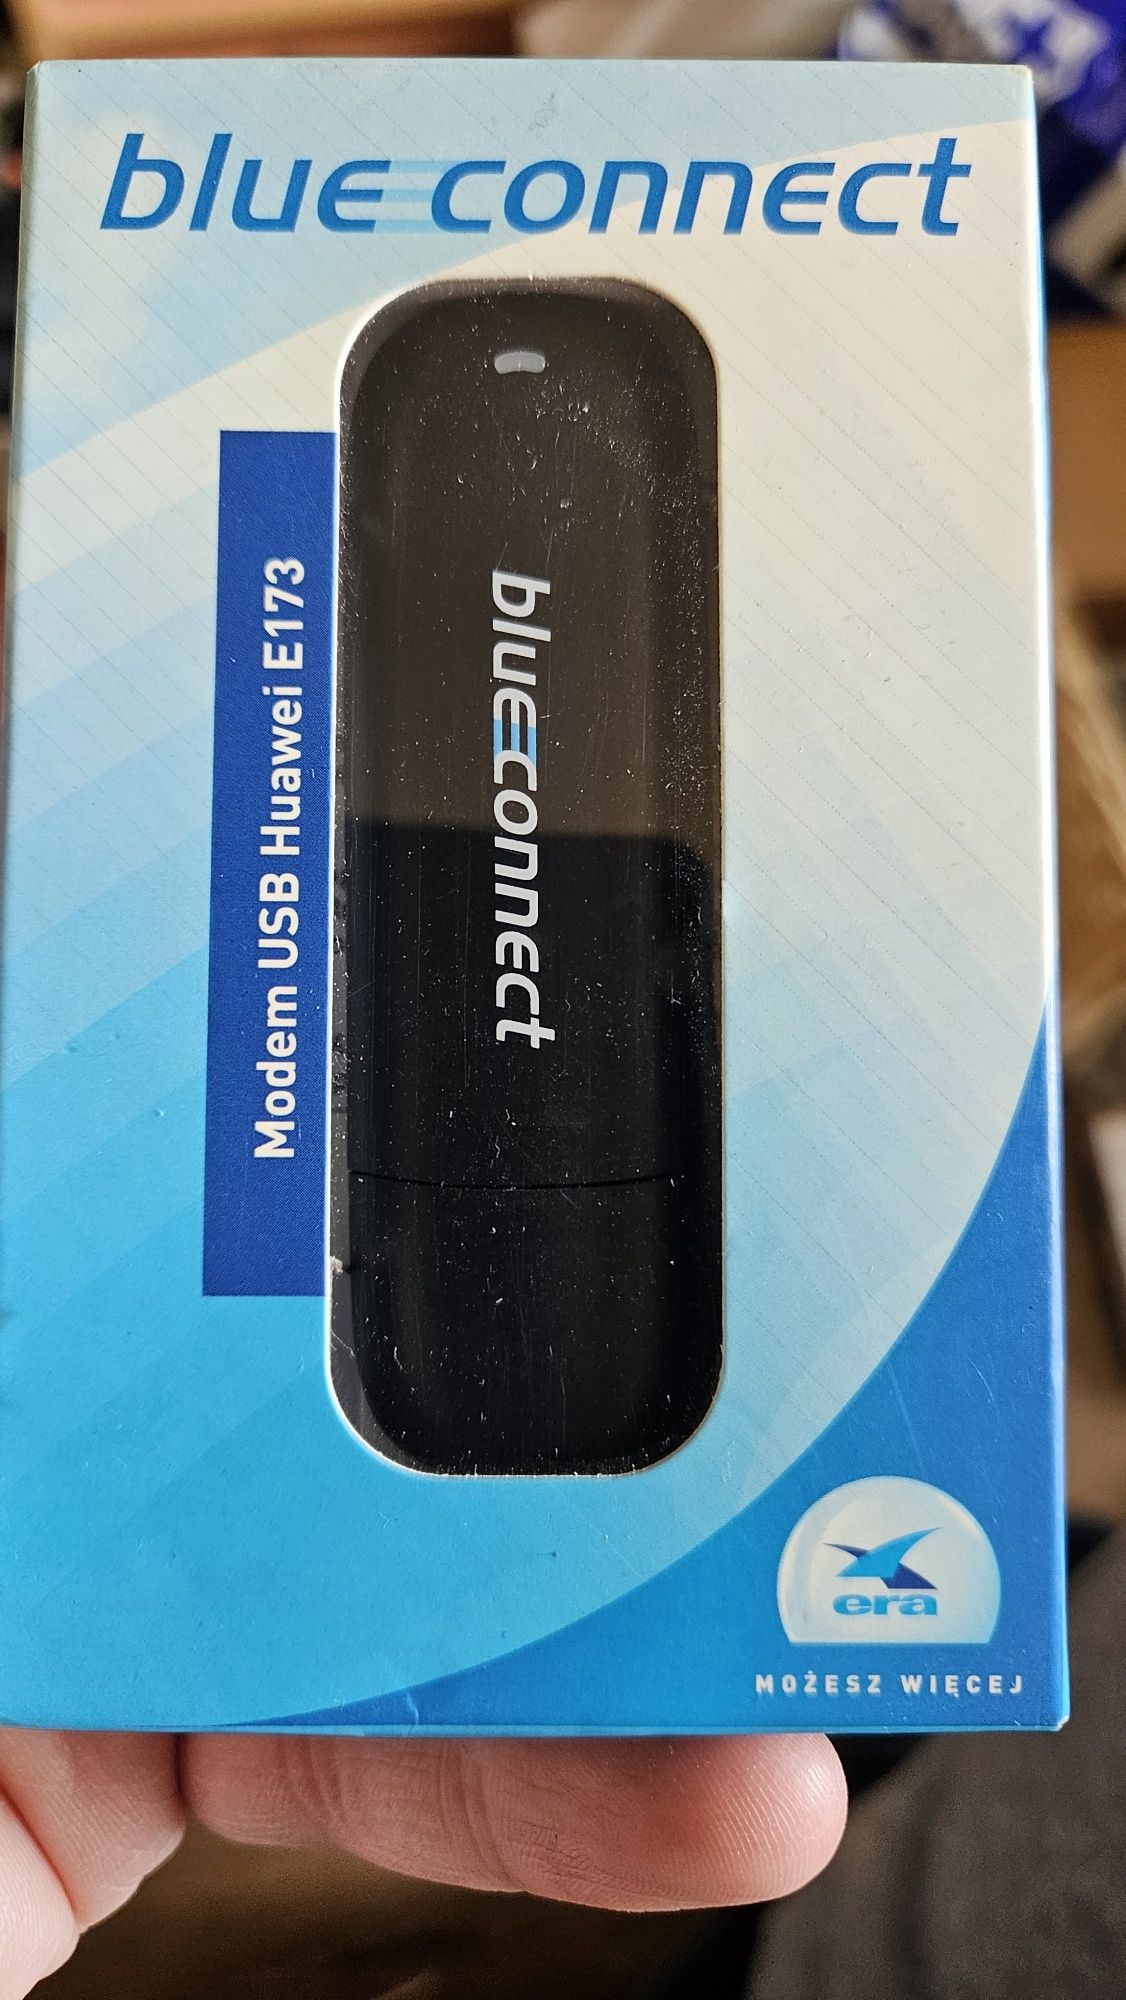 Modem USB Huawei E173